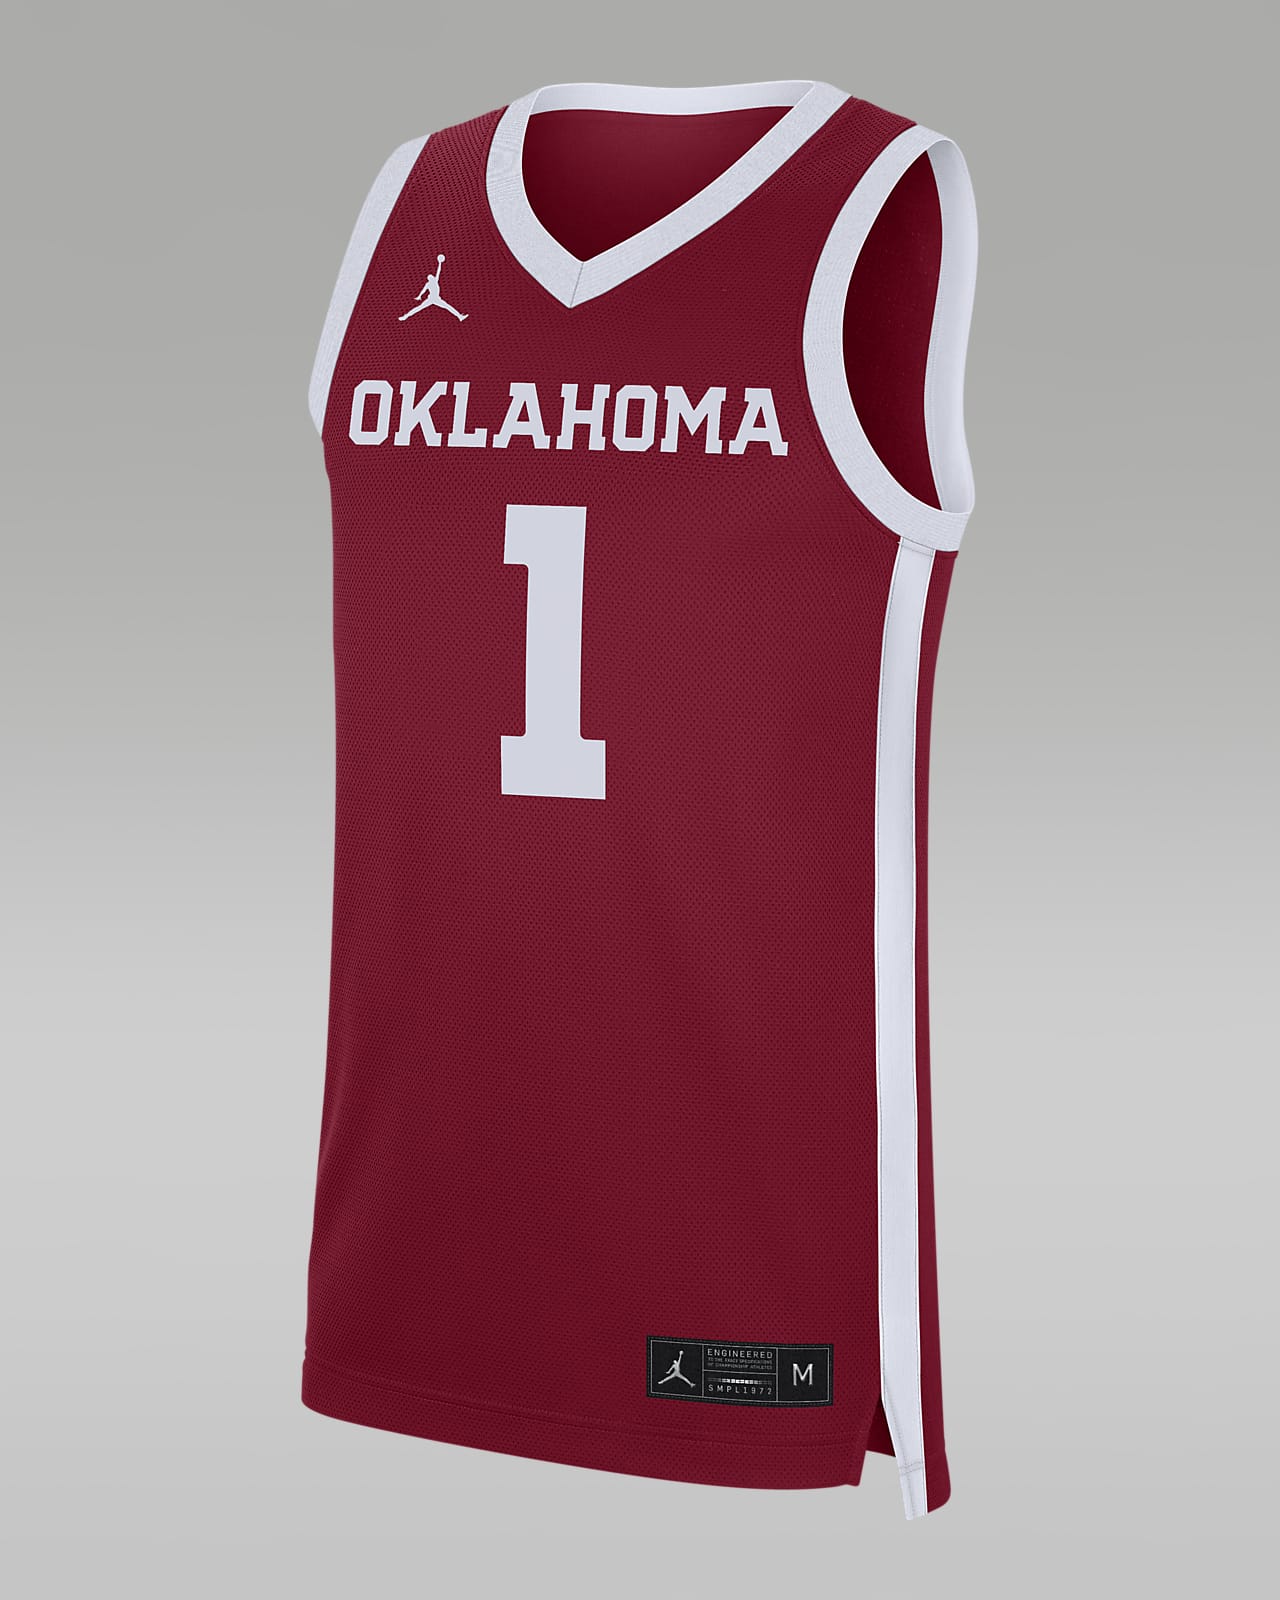 Camiseta de básquetbol para Hombre Nike College Replica (Oklahoma)